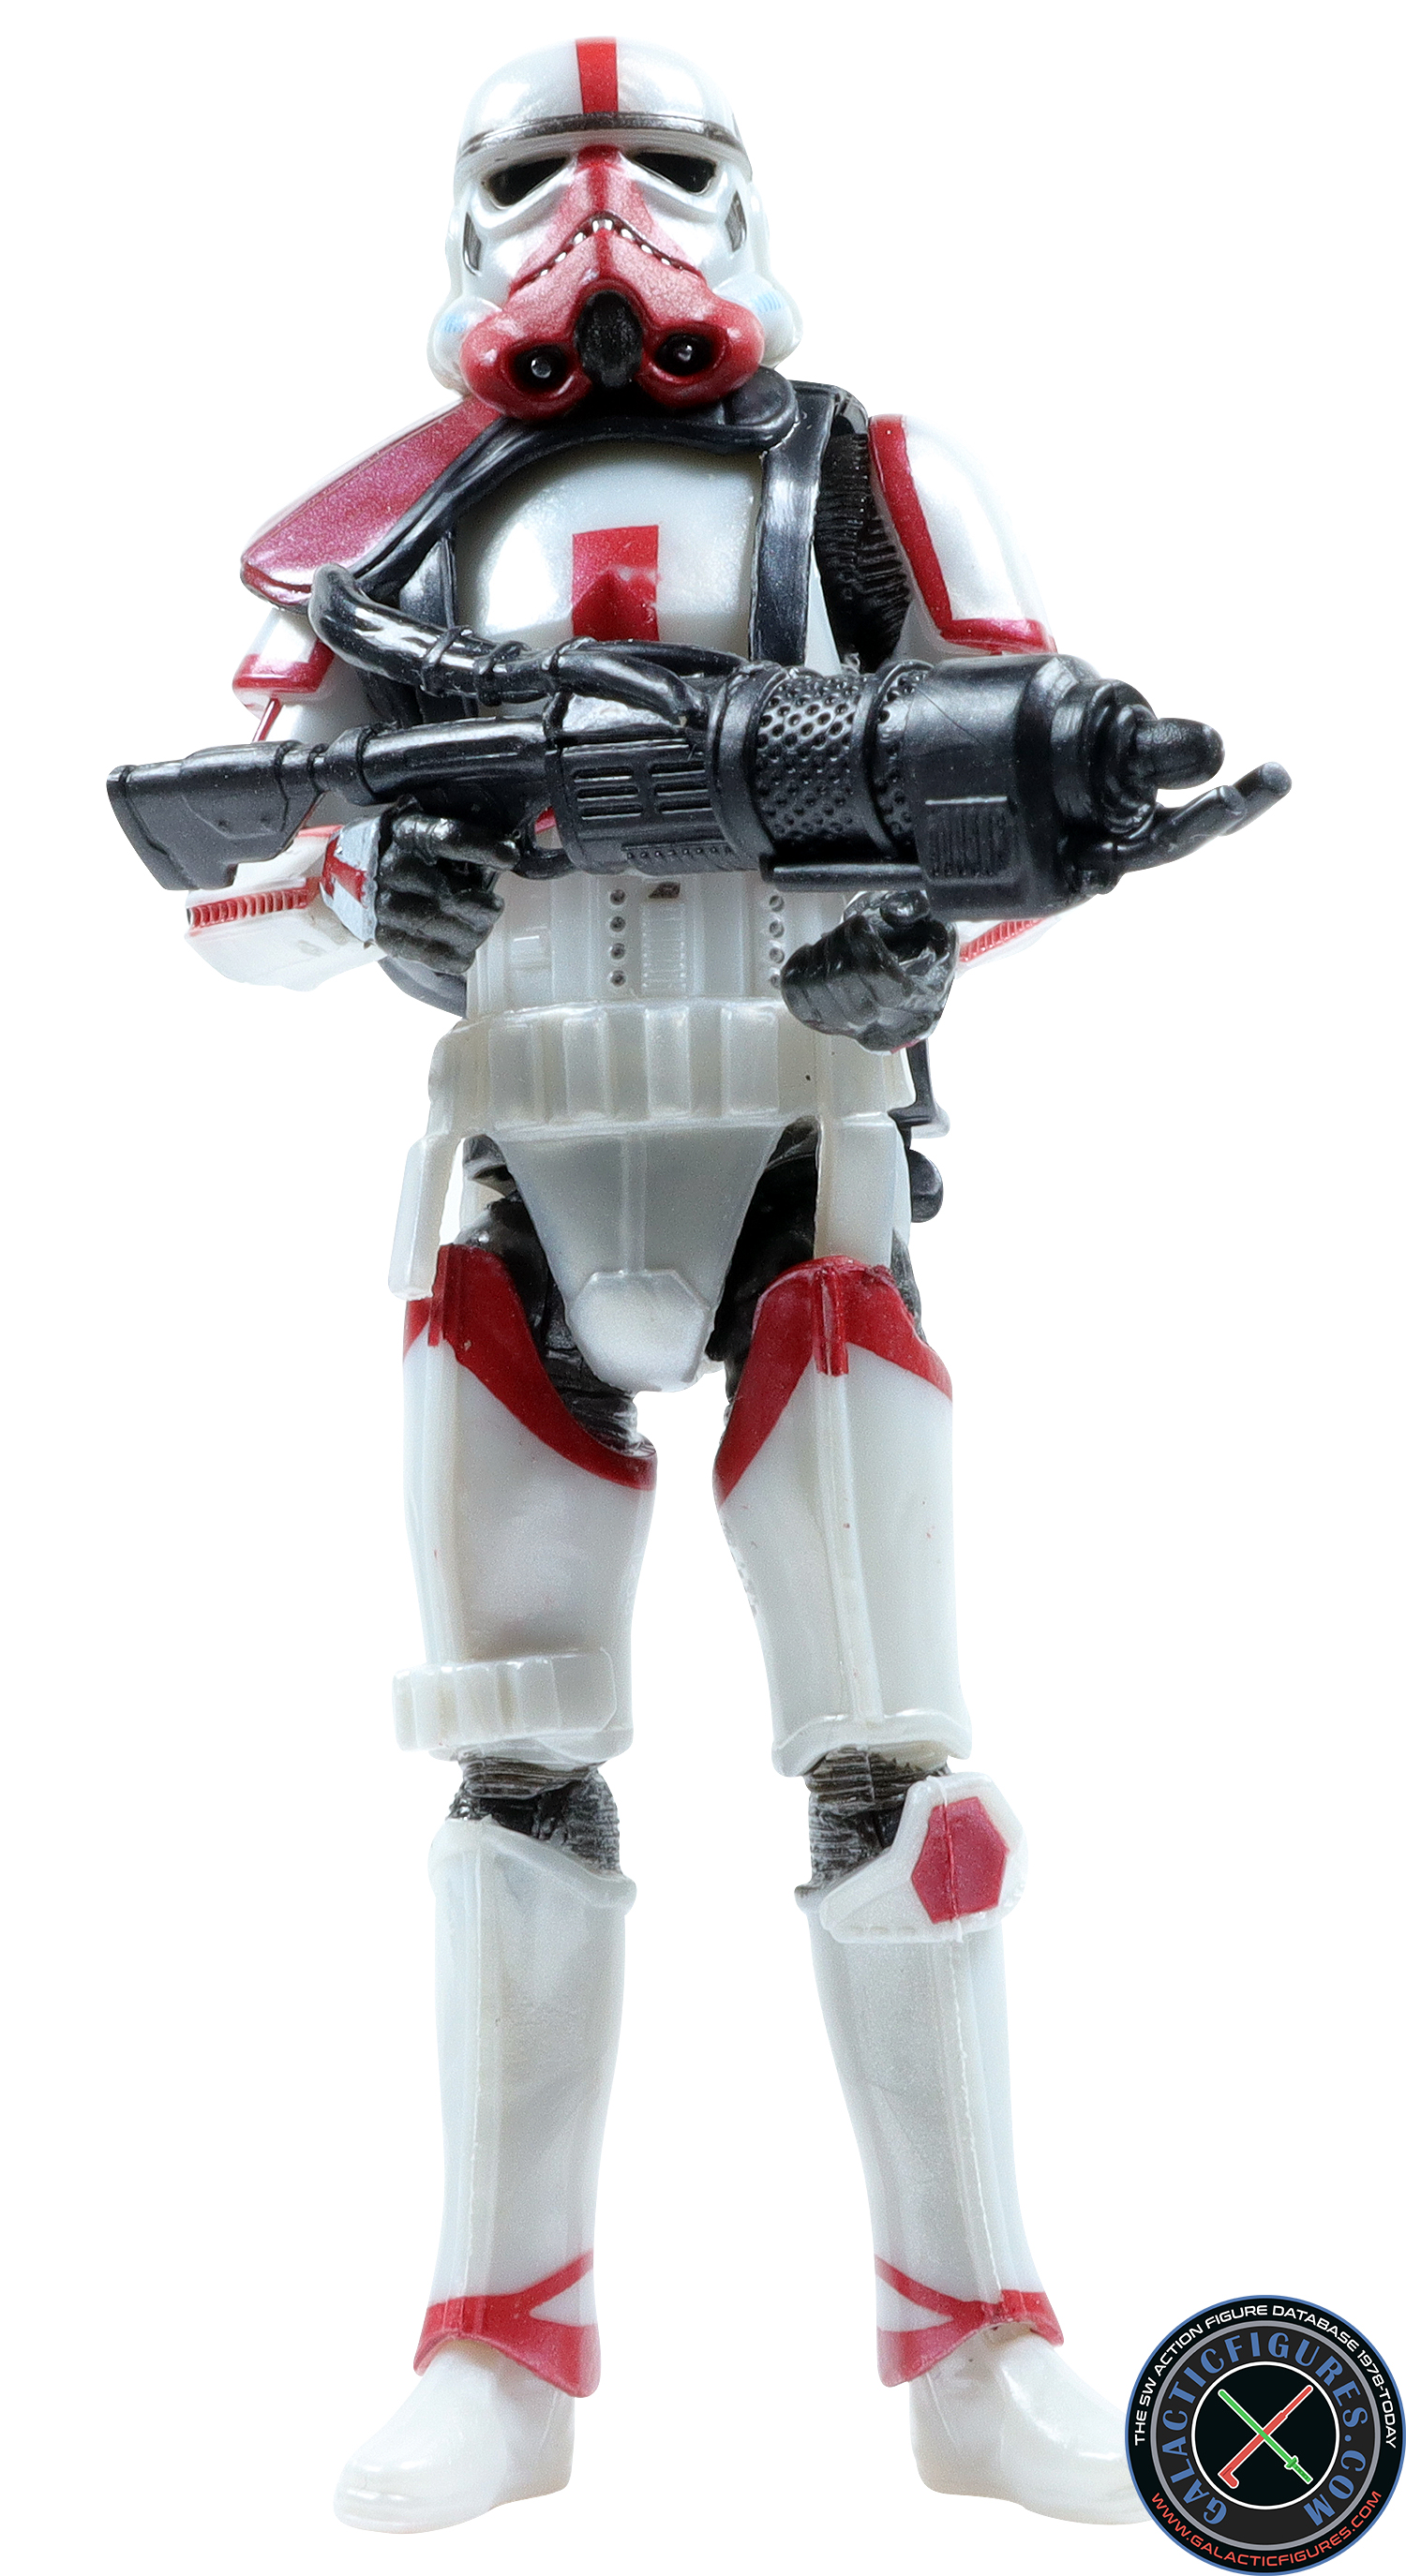 Incinerator Stormtrooper Carbonized